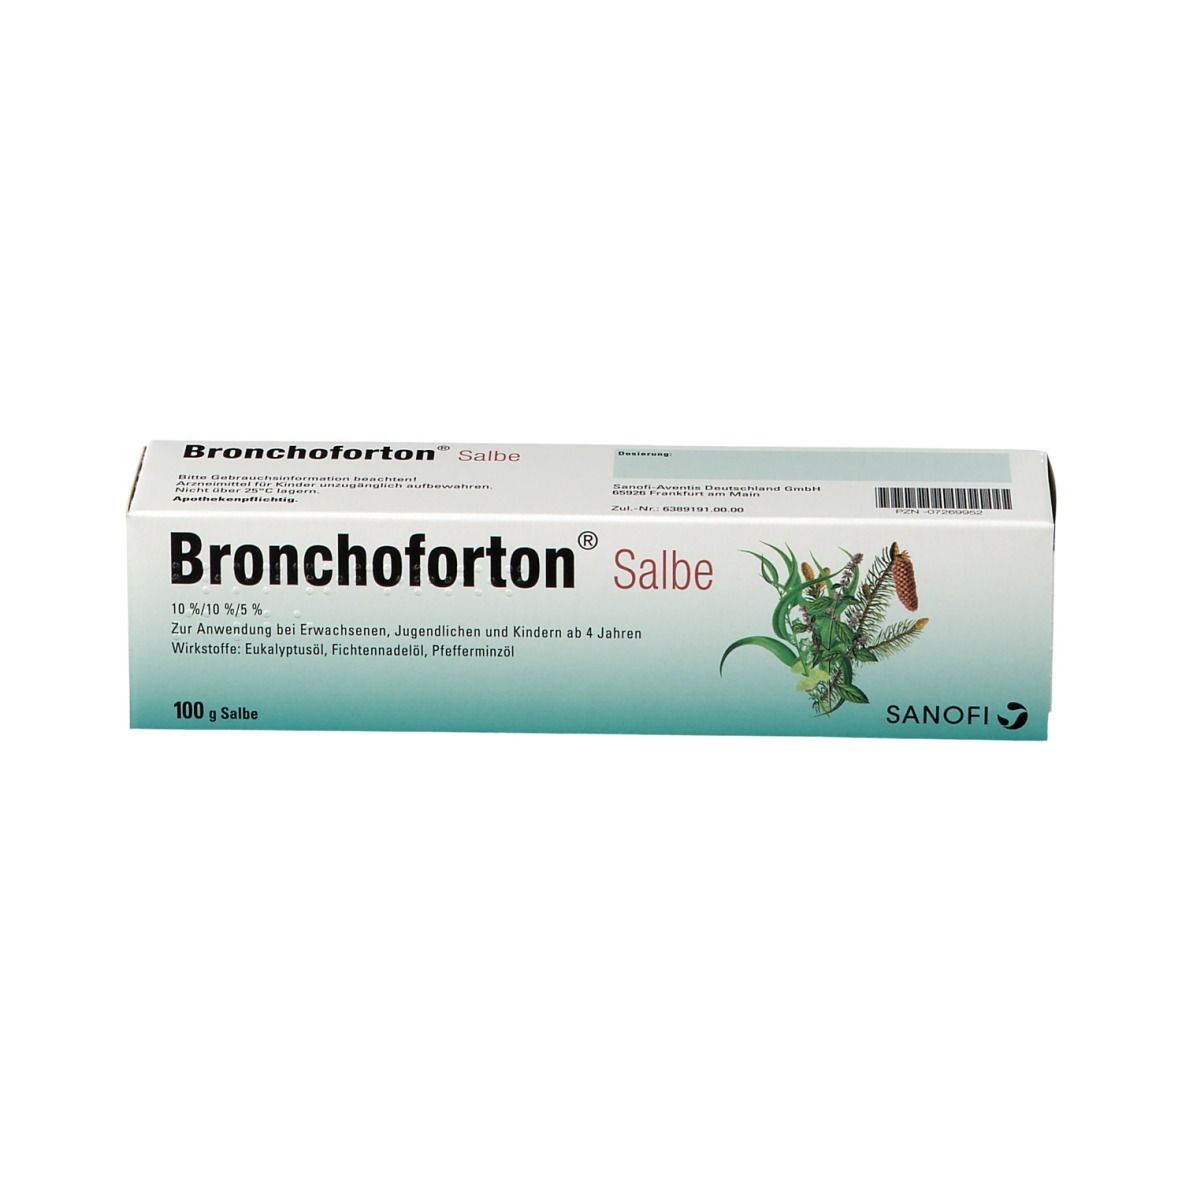 Bronchoforton® Salbe